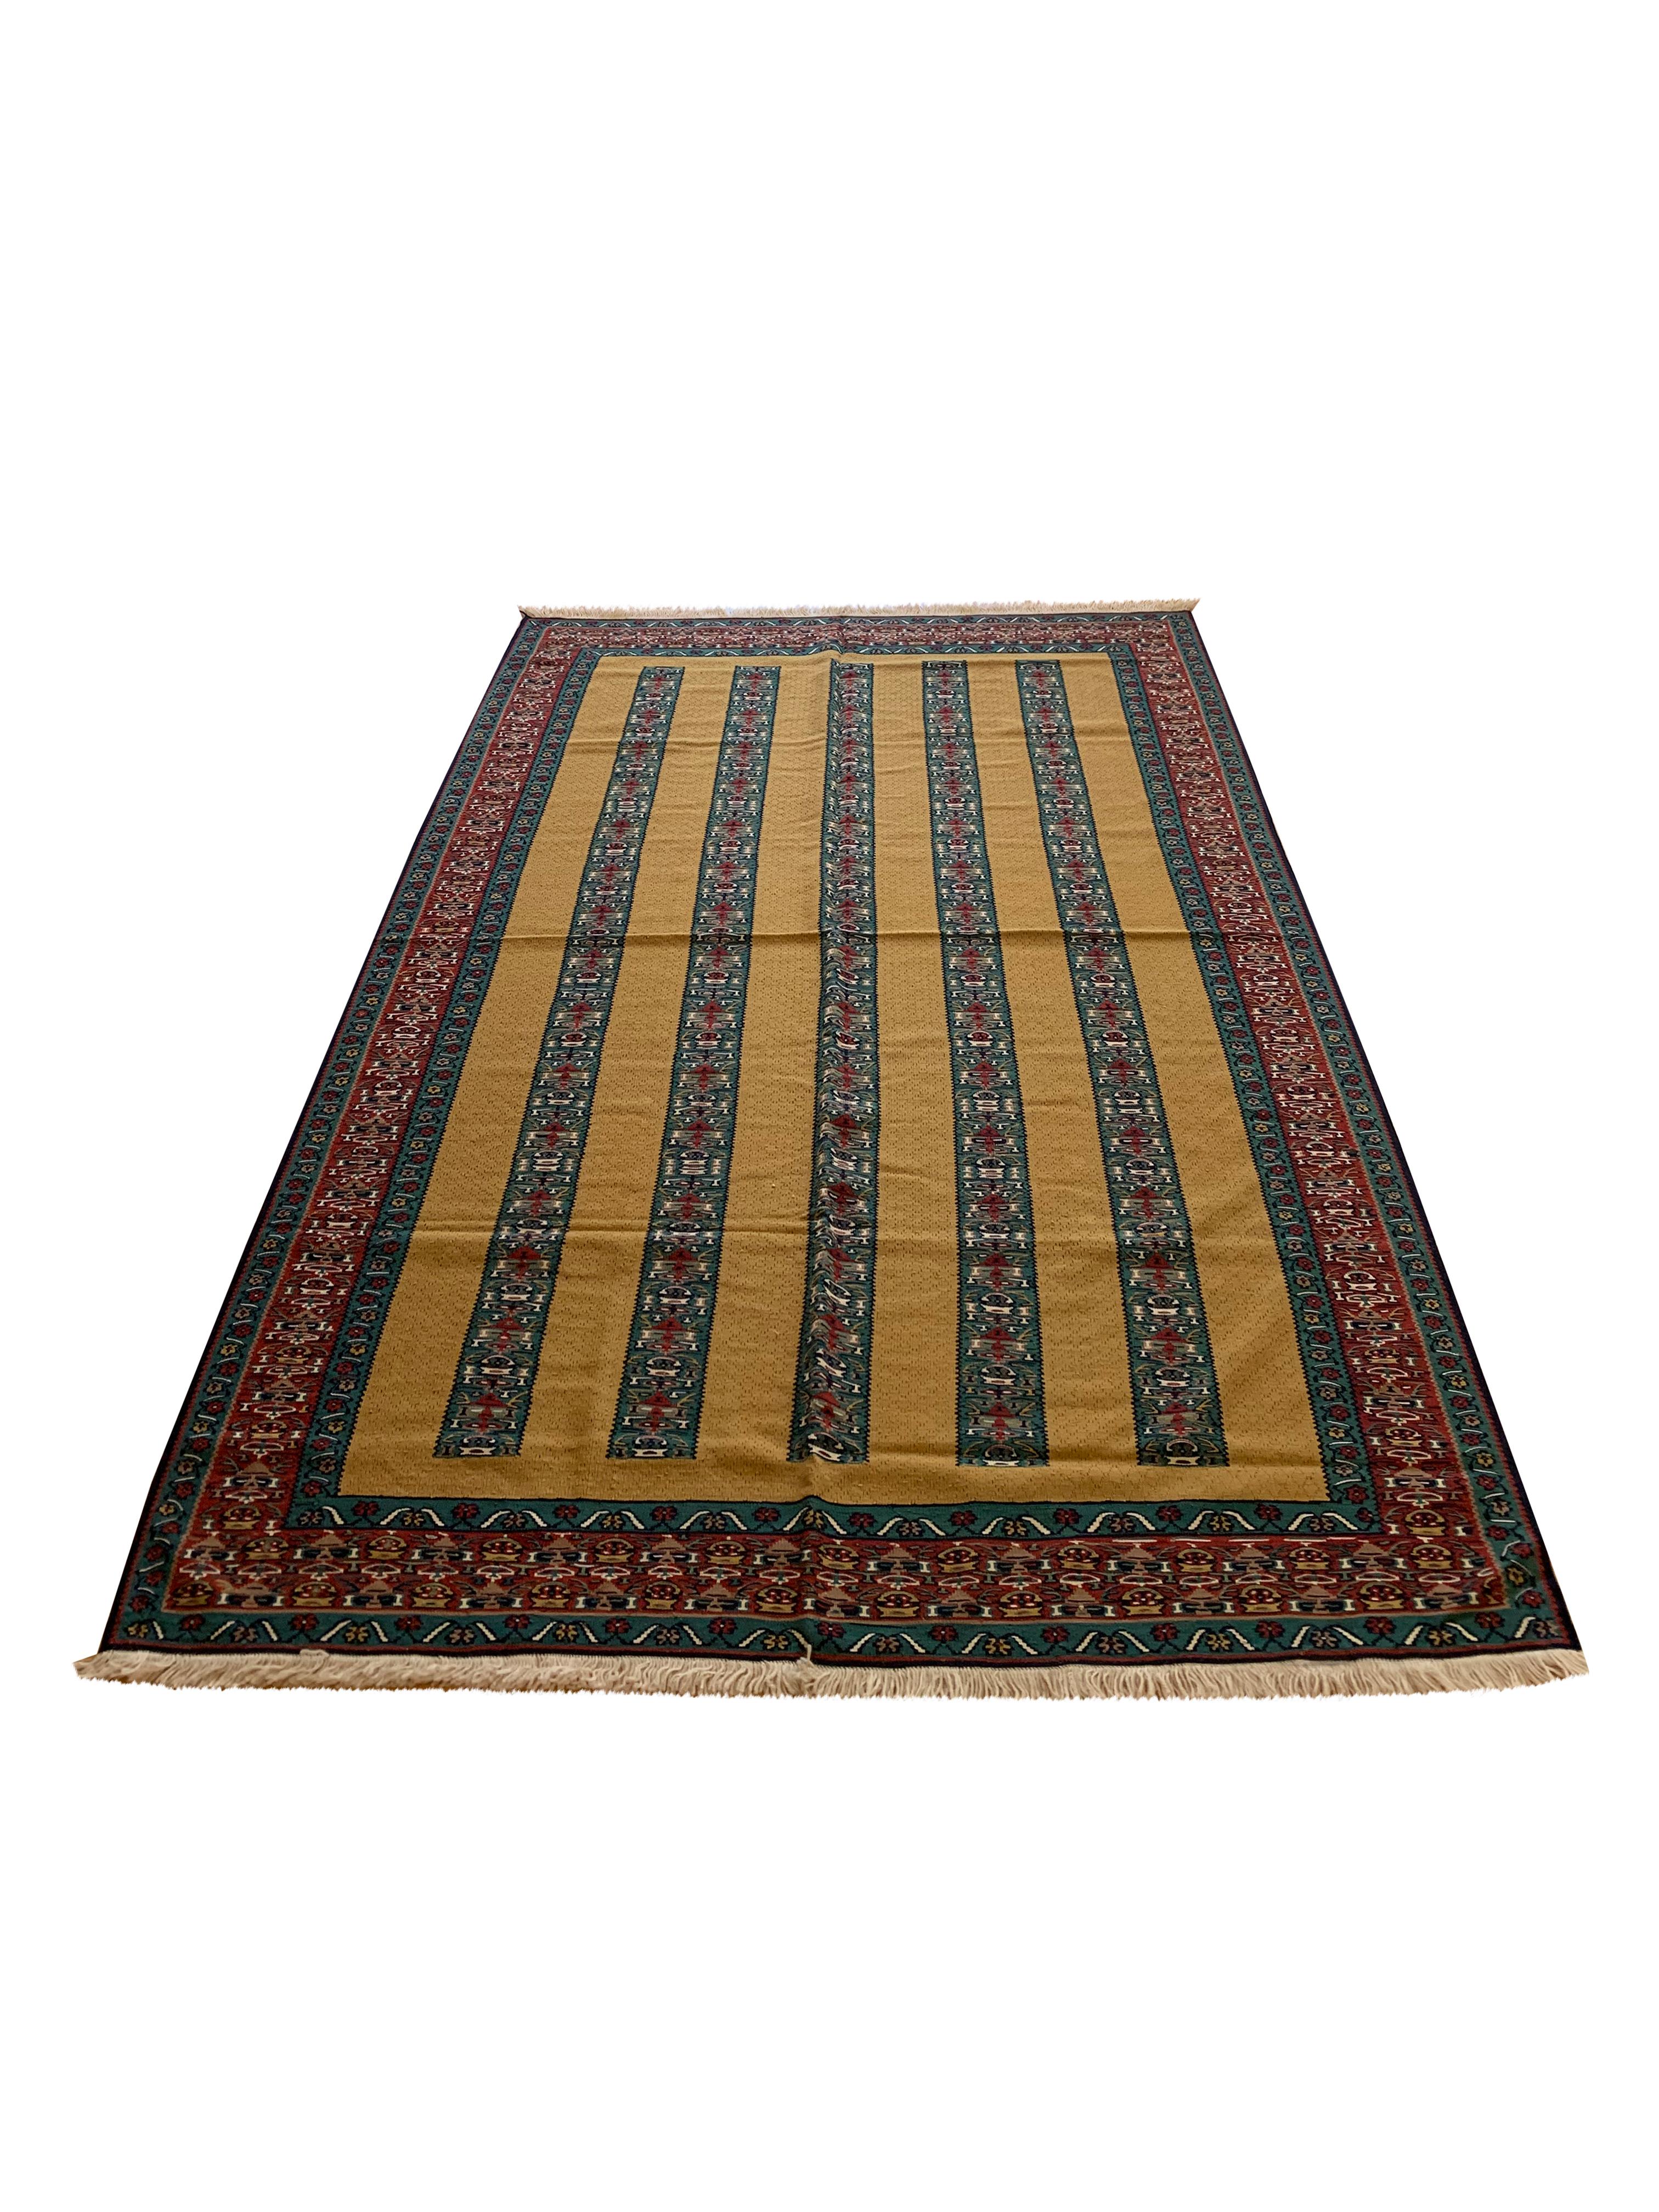 Tribal Modern Striped Yellow Kilim Rug Handwoven Oriental Wool Carpet For Sale